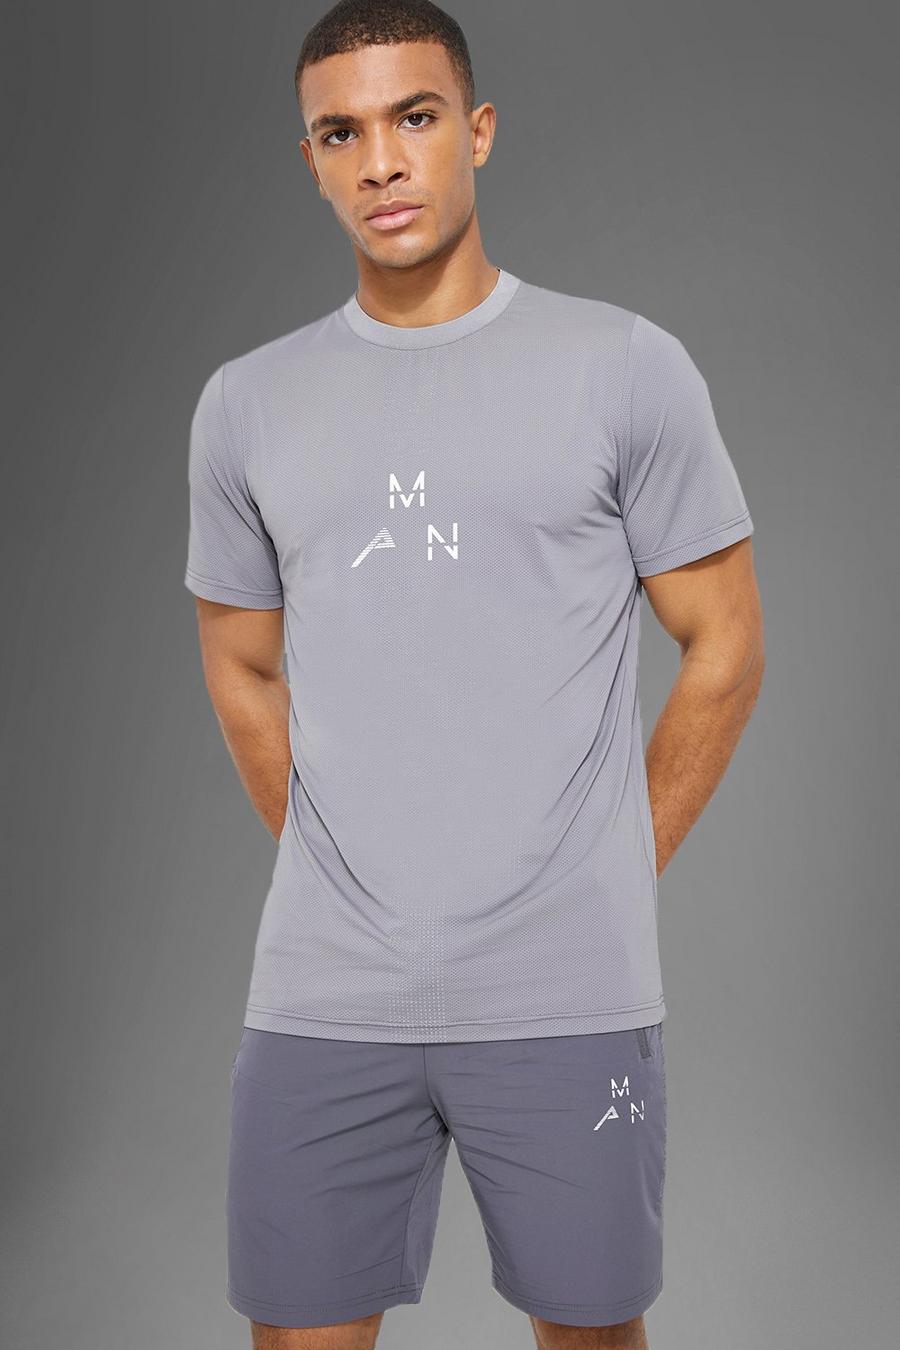 Charcoal grey Man Active Gym Reflective Panel  T-Shirt